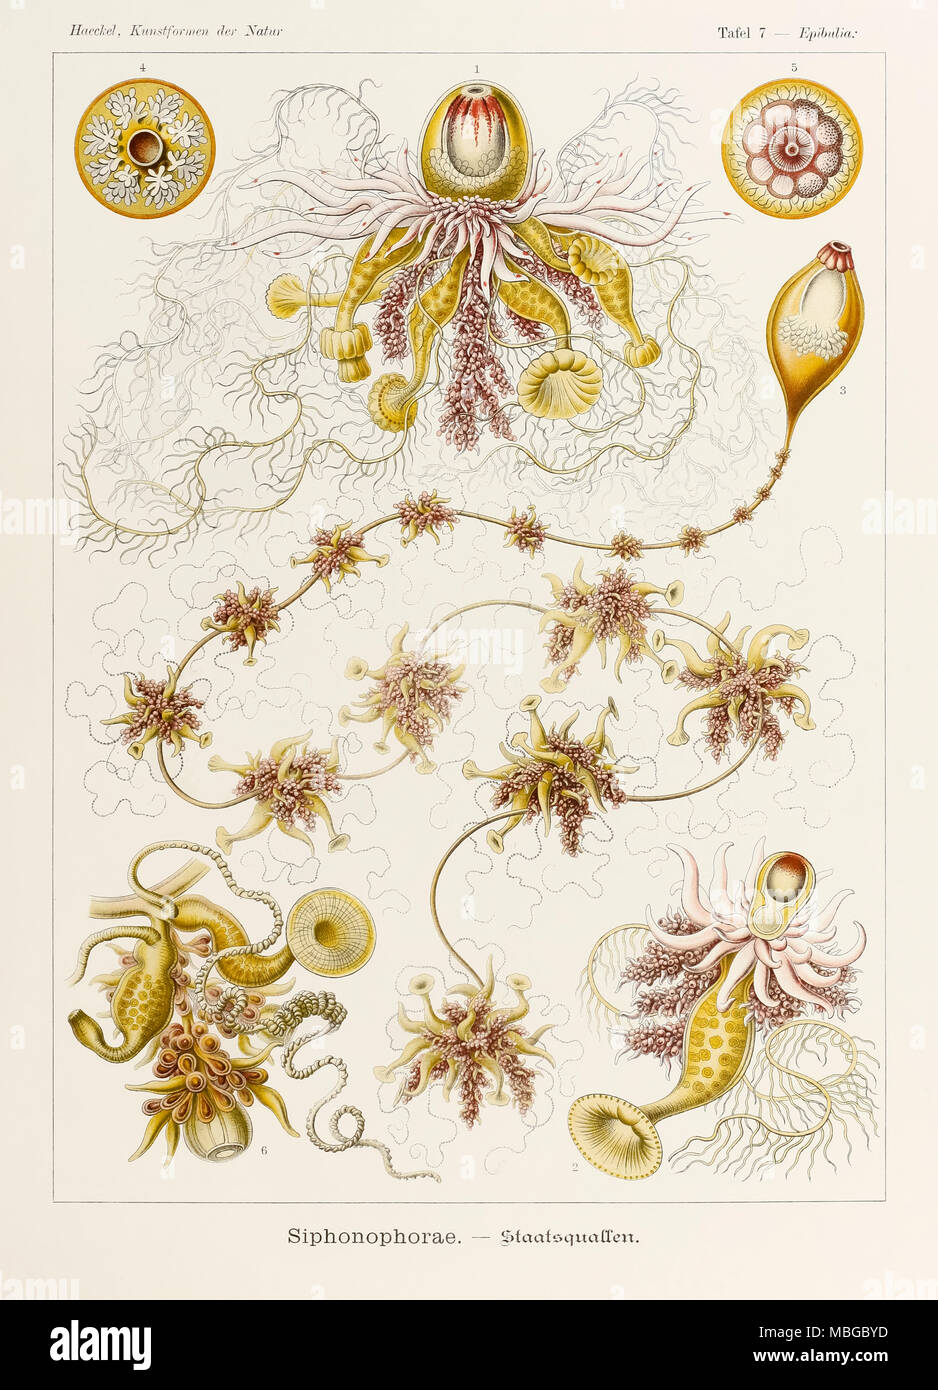 Plate 7 Epibulia Siphonophorae from ‘Kunstformen der Natur’ (Art Forms in Nature) illustrated by Ernst Haeckel (1834-1919). See more information below. Stock Photo